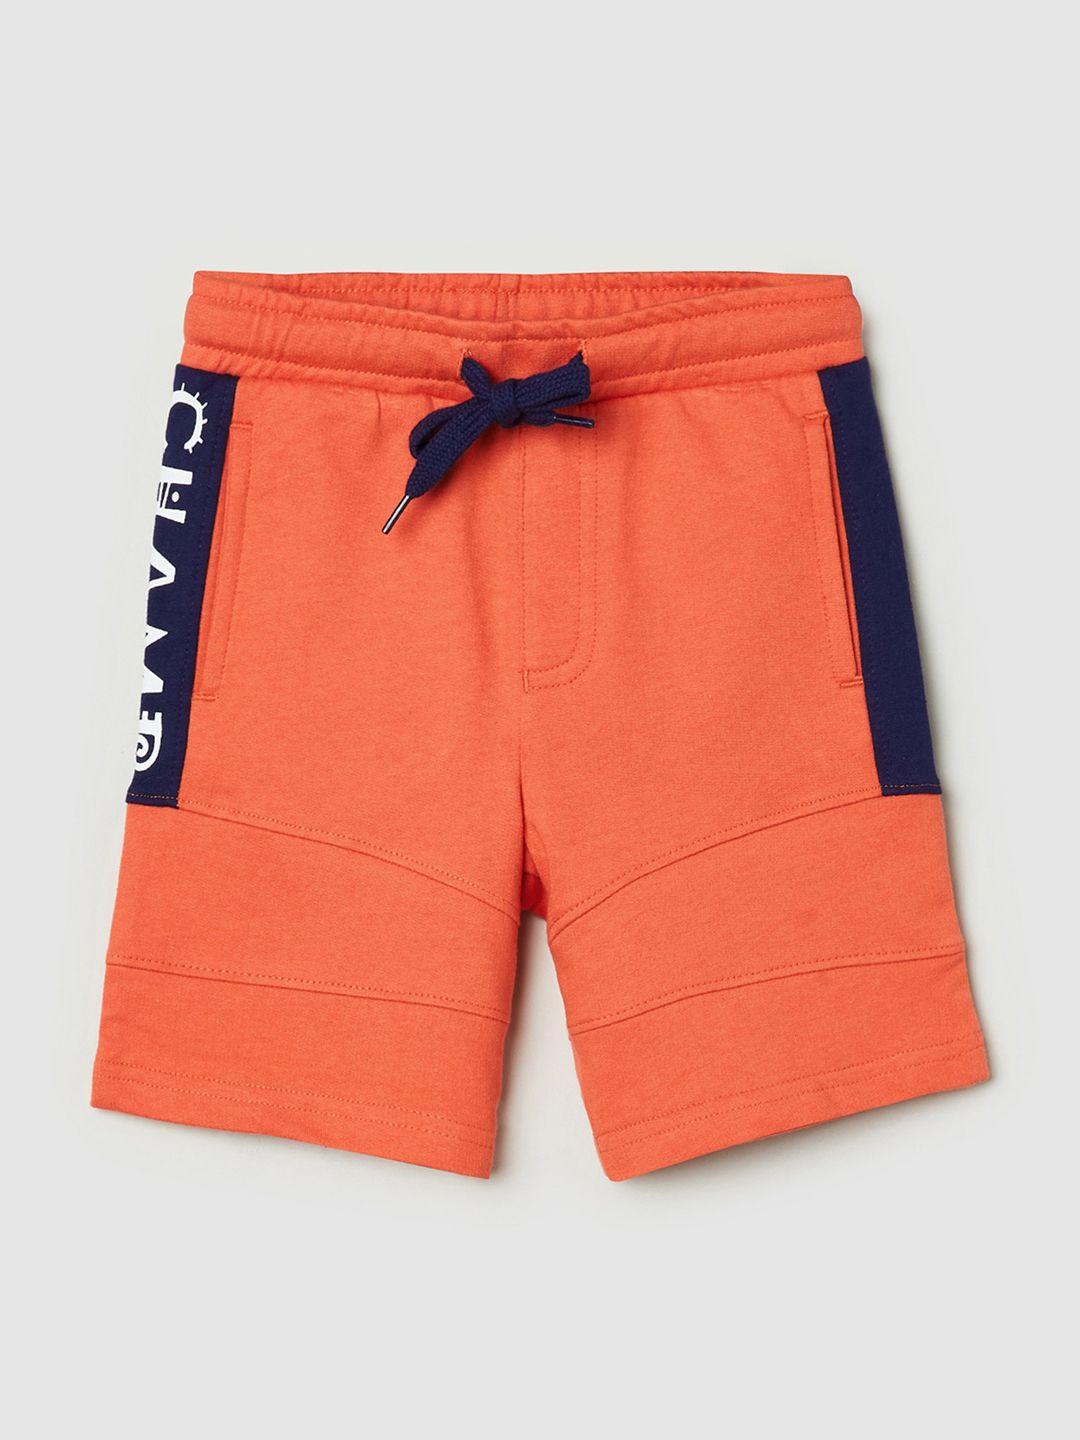 max-boys-orange-shorts